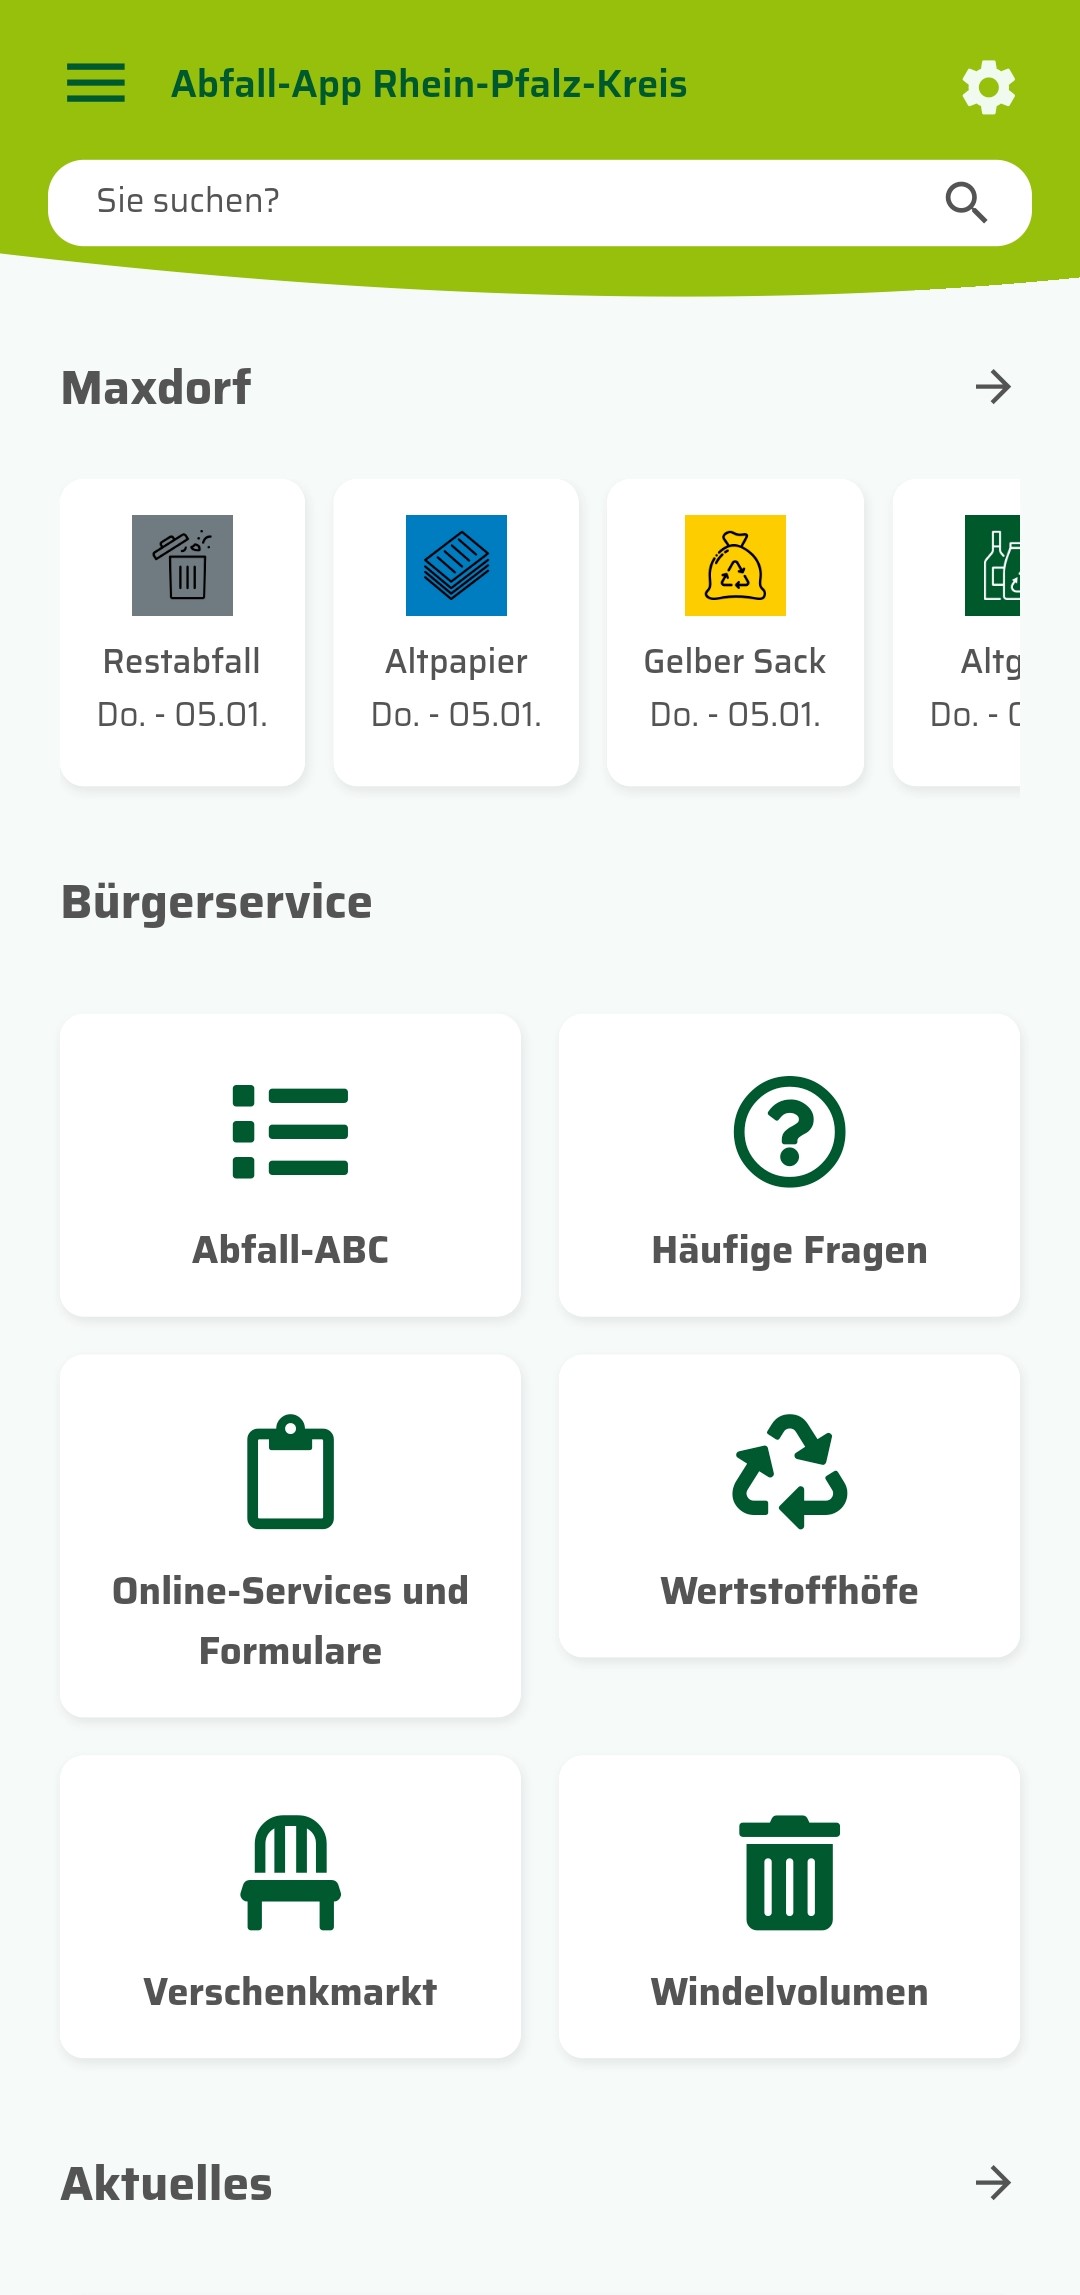 Die neue "Abfall-App Rhein-Pfalz-Kreis"